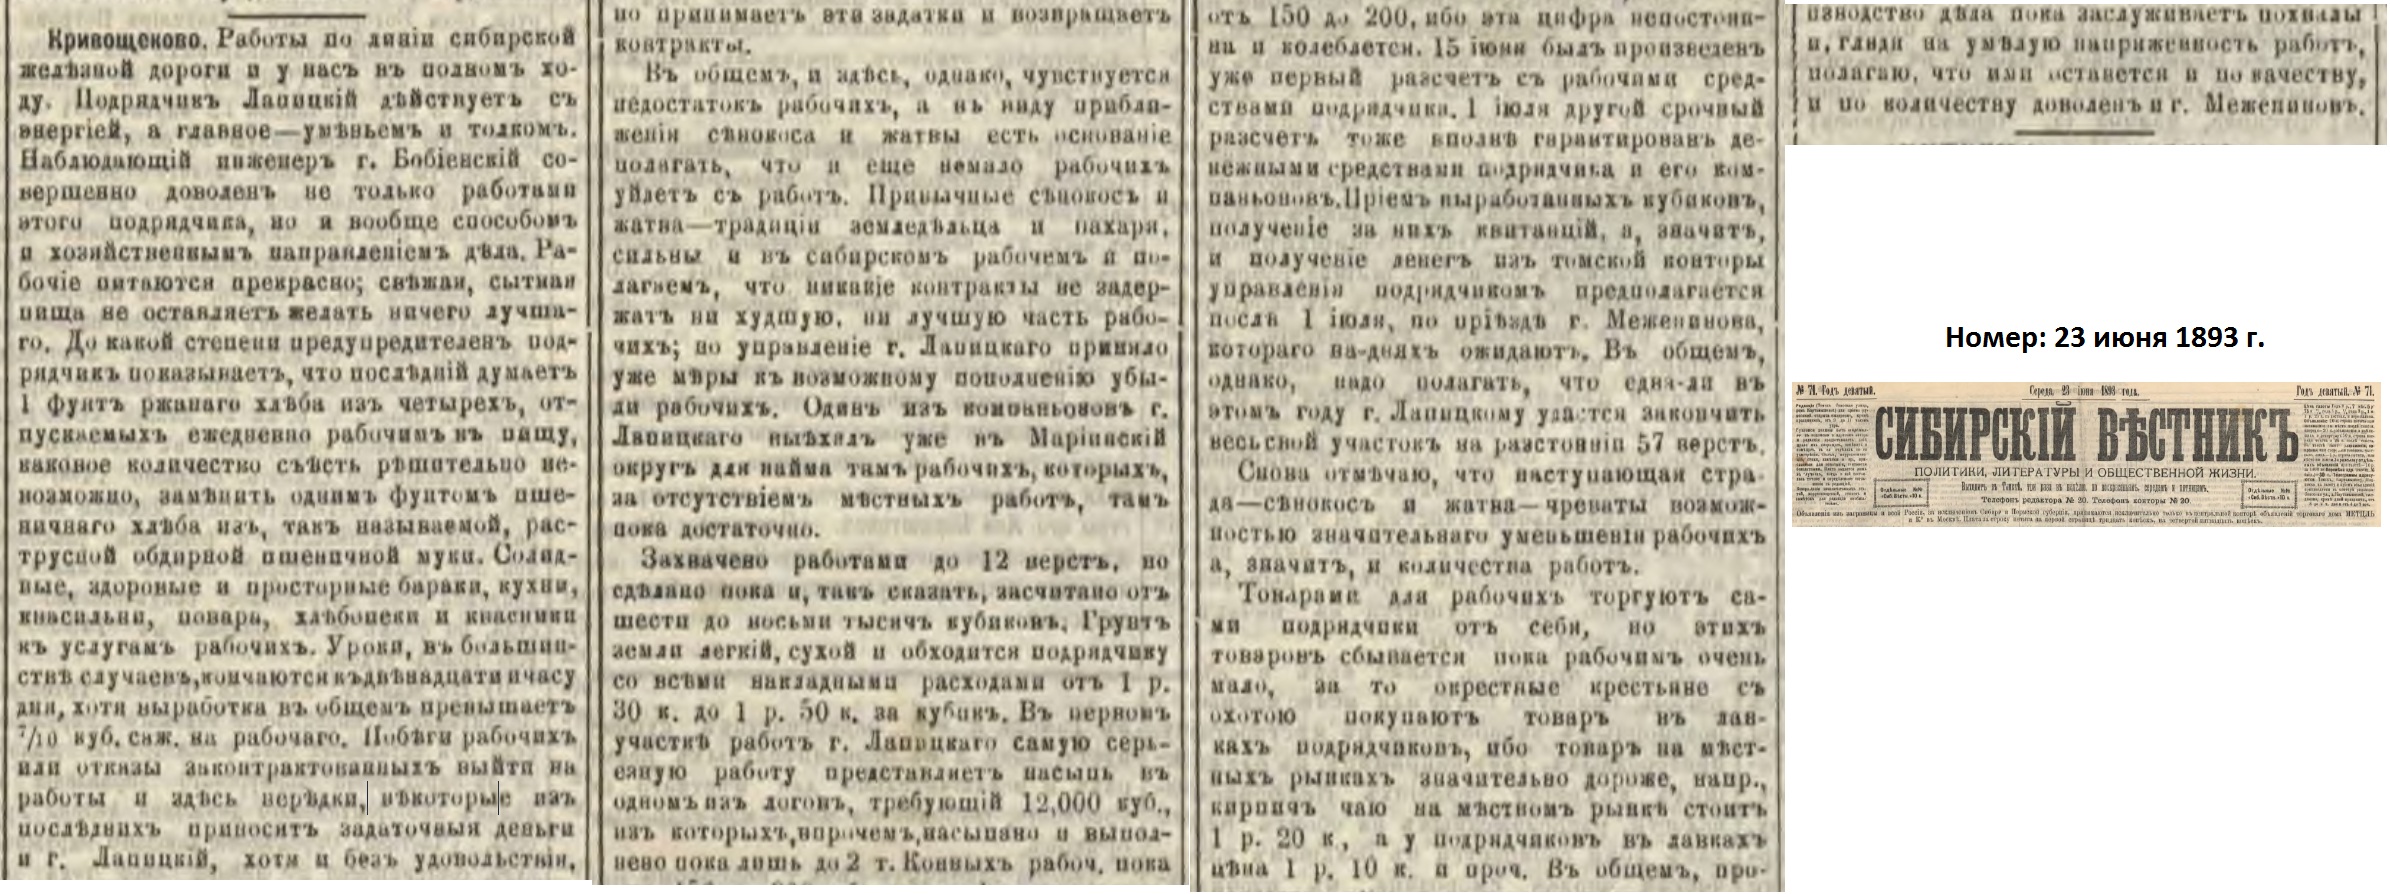 Сибирский вестник 23 июня 1893